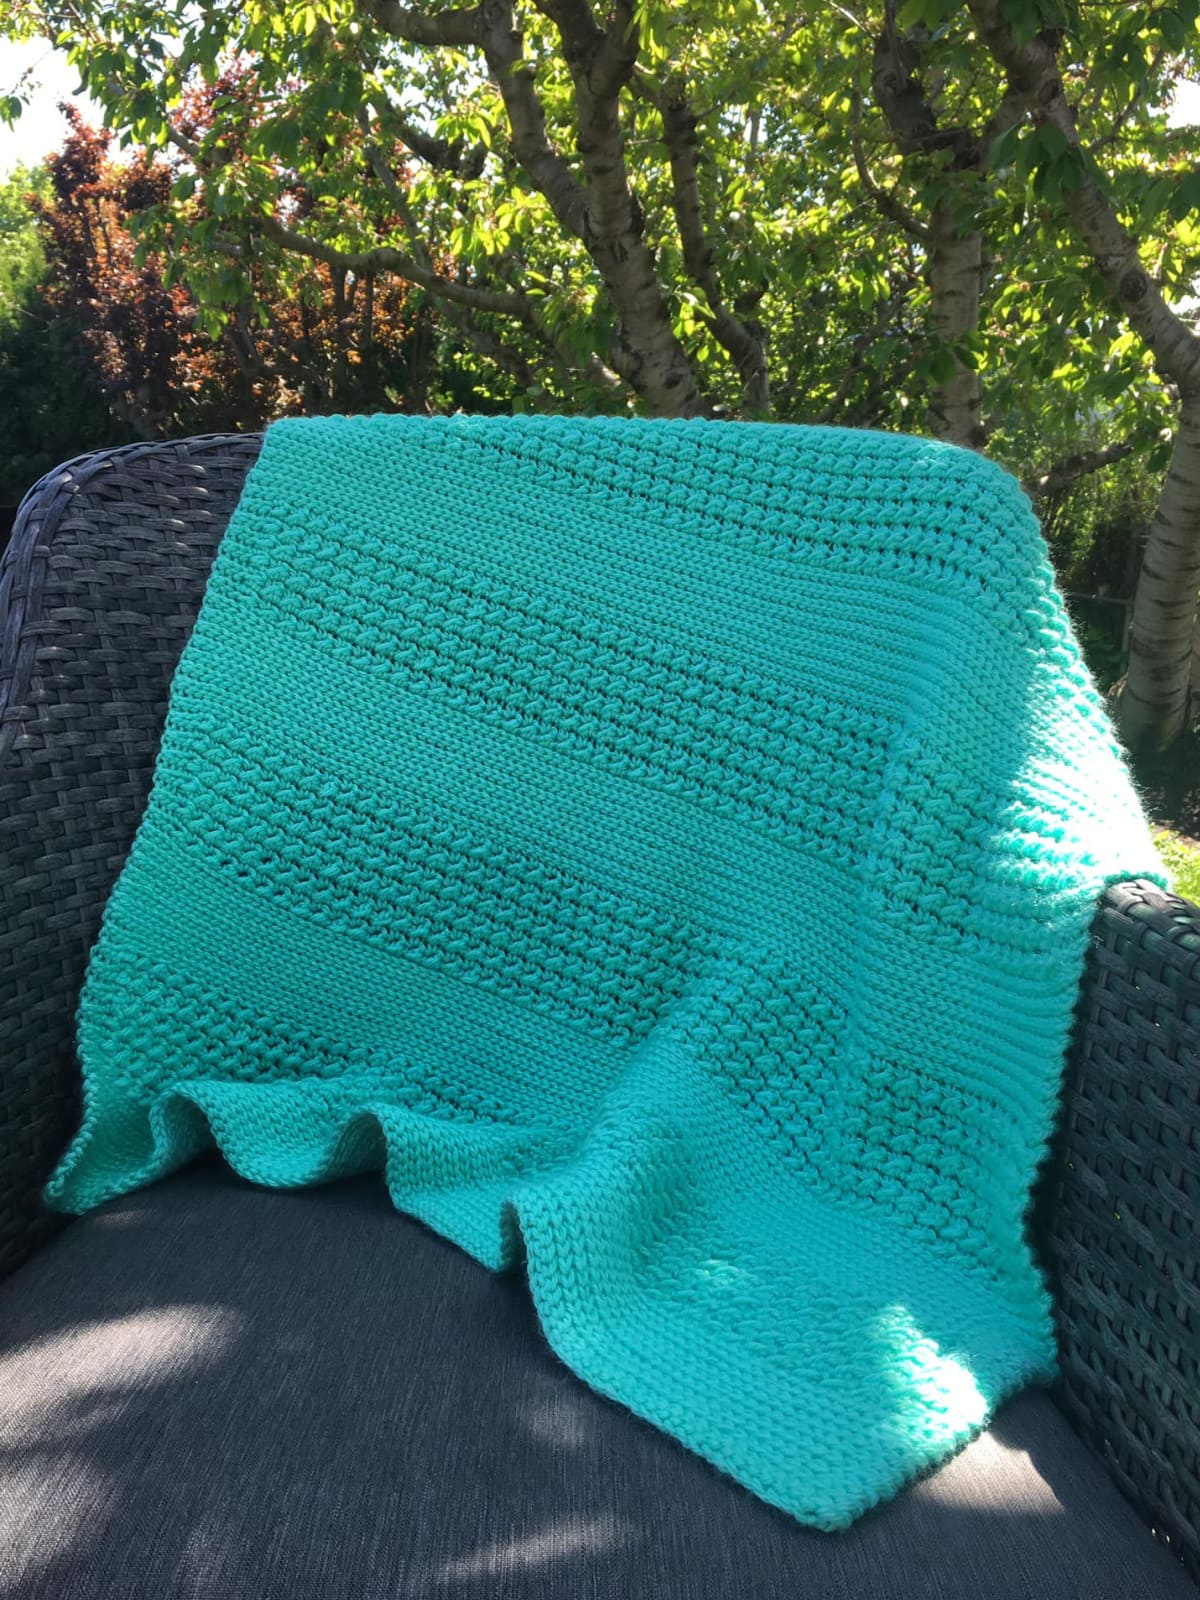 Abrielle Crochet Baby Blanket Pattern - A Crocheted Simplicity